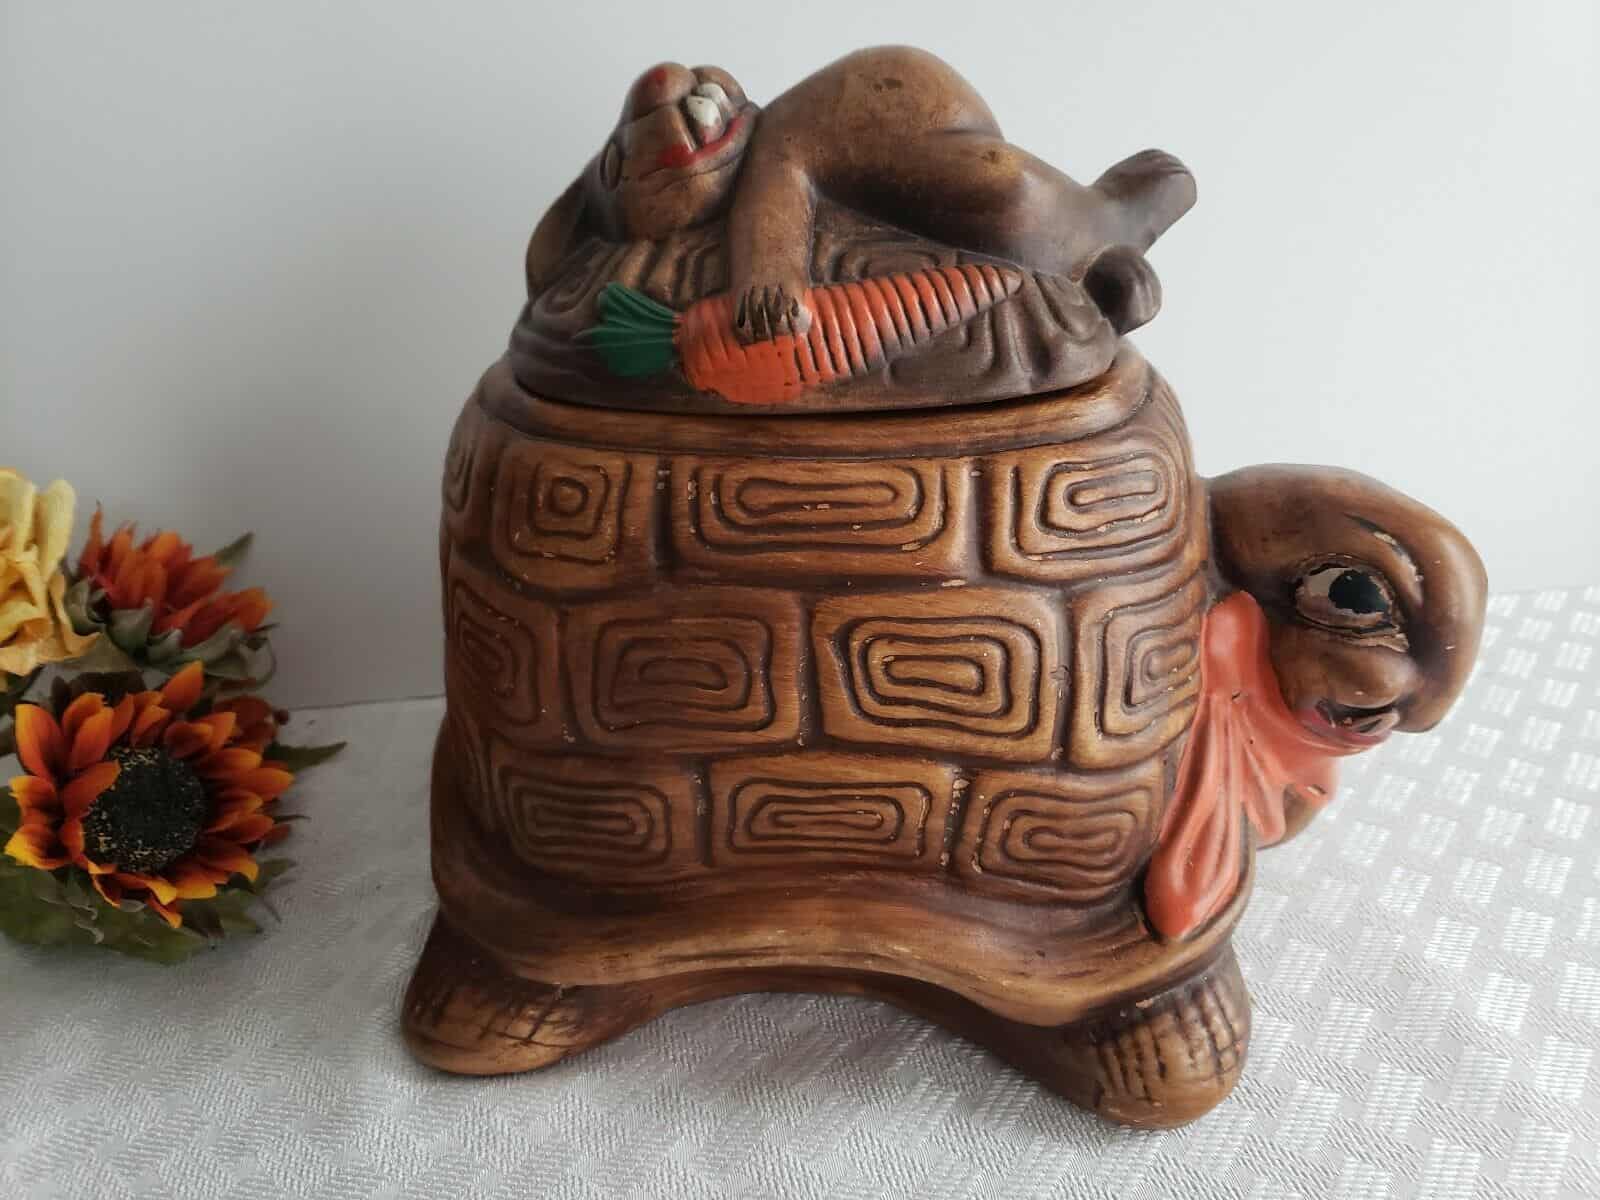 California Original - Tortoise And The Hare Cookie Jar